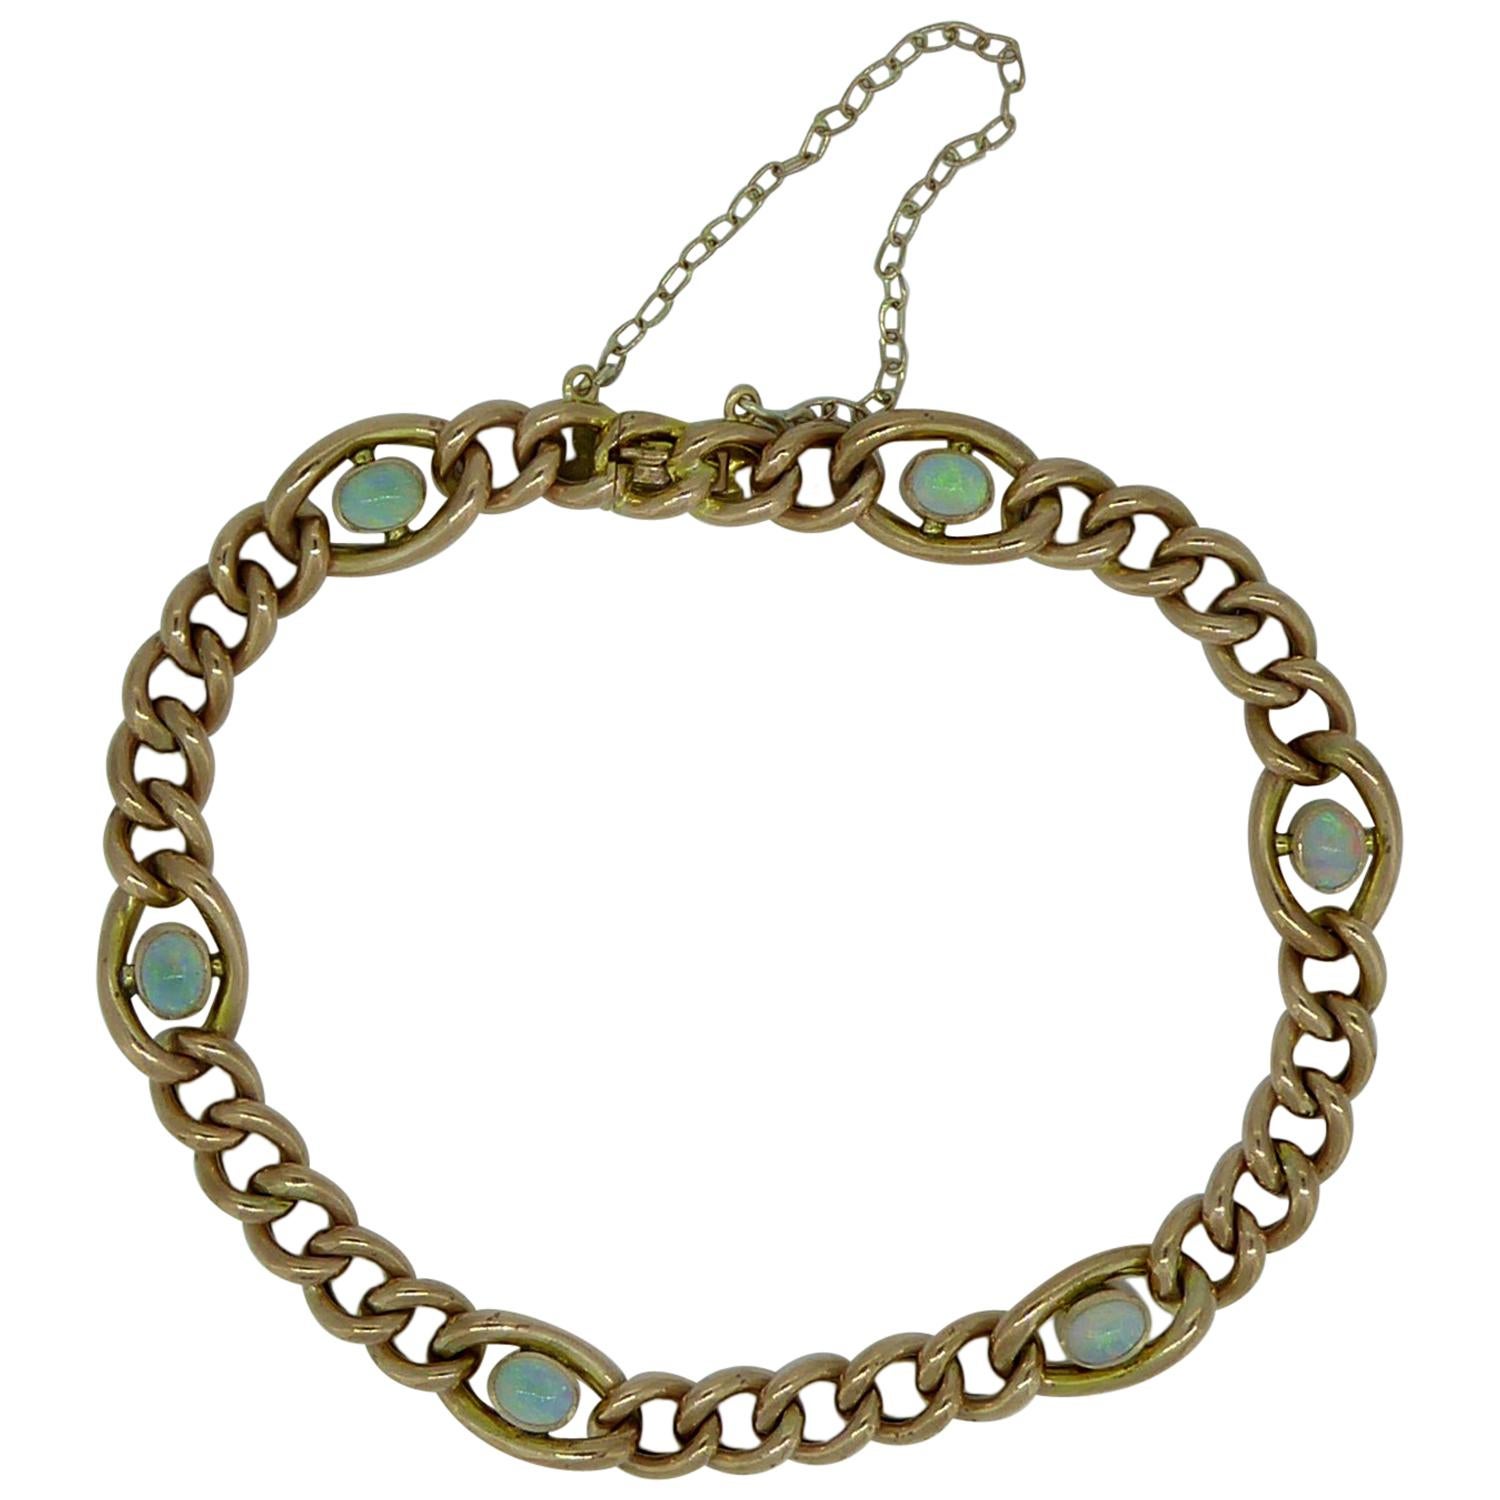 Antique Edwardian Gold Curb Link Bracelet with Cabochon Opals